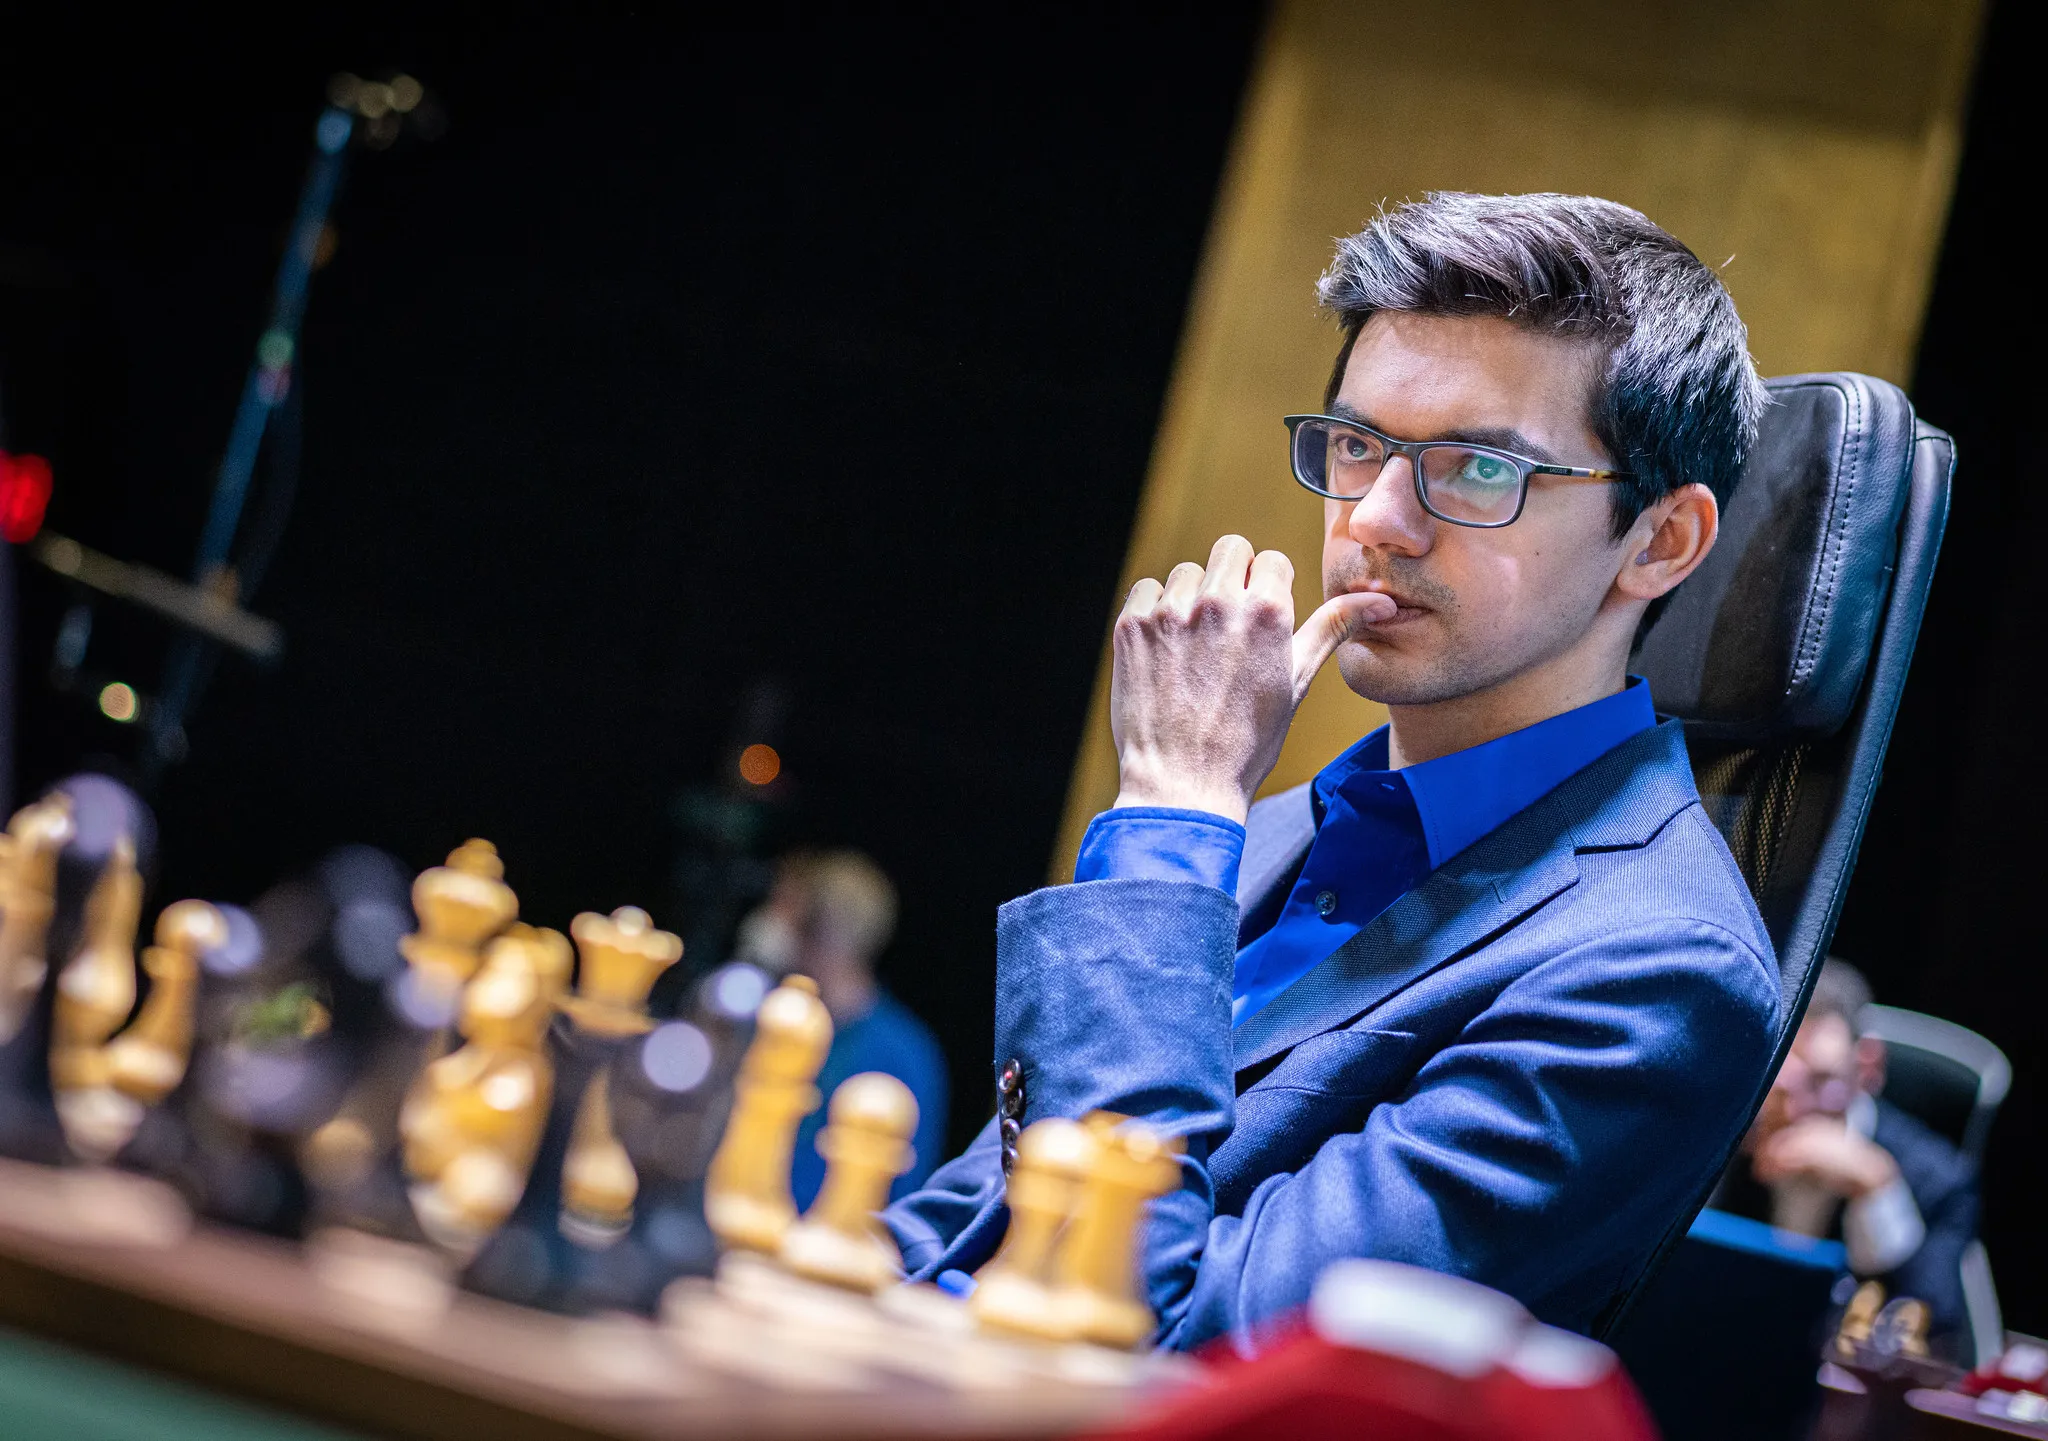 Giri Wins On Demand To Finish 1st In Tata Steel Chess Masters